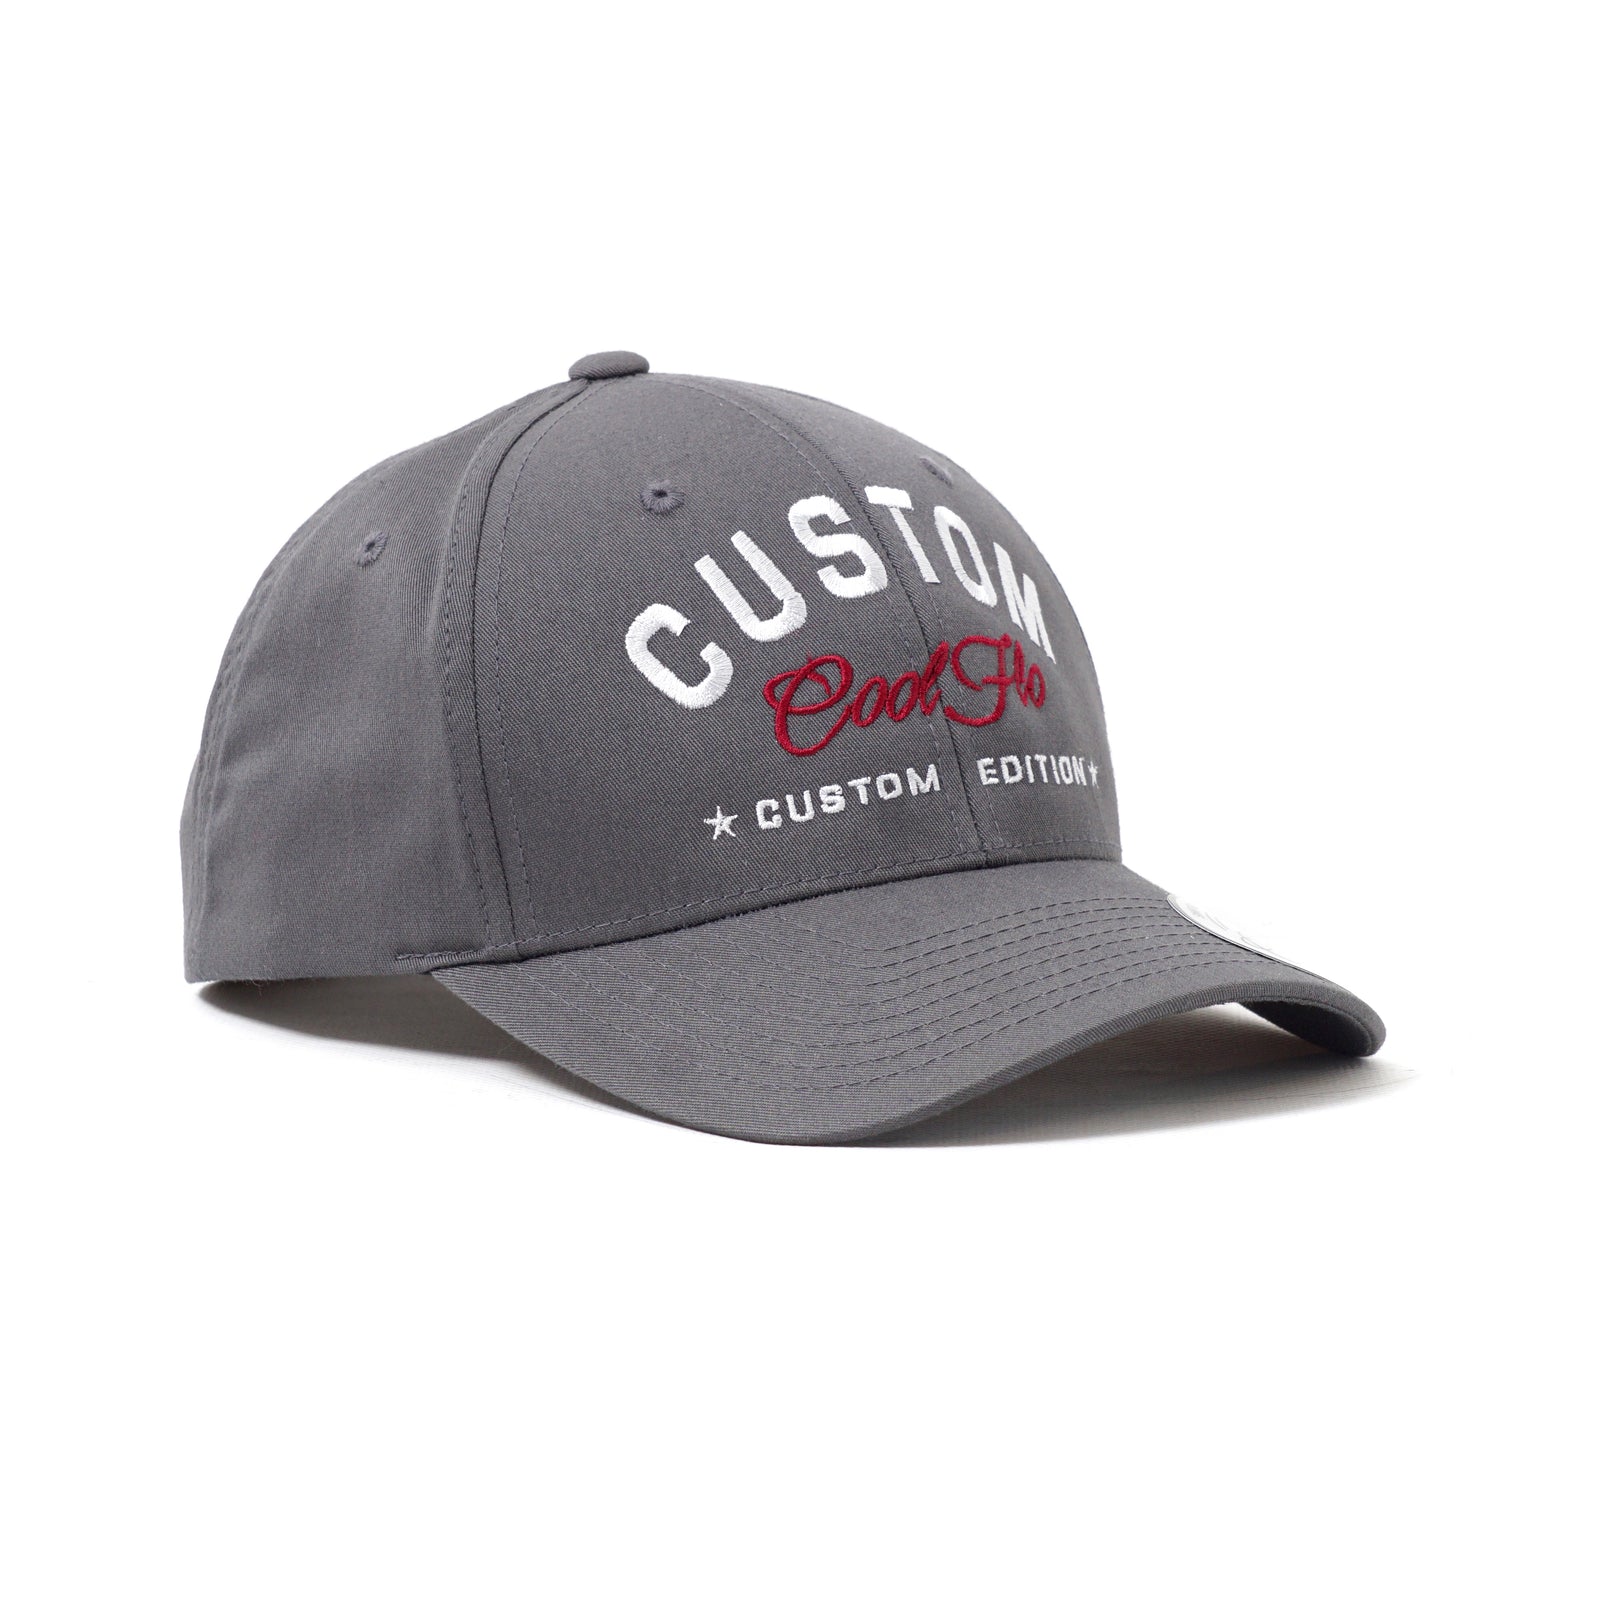 CUSTOM EDITION Name Baseball Cap - Cool Flo